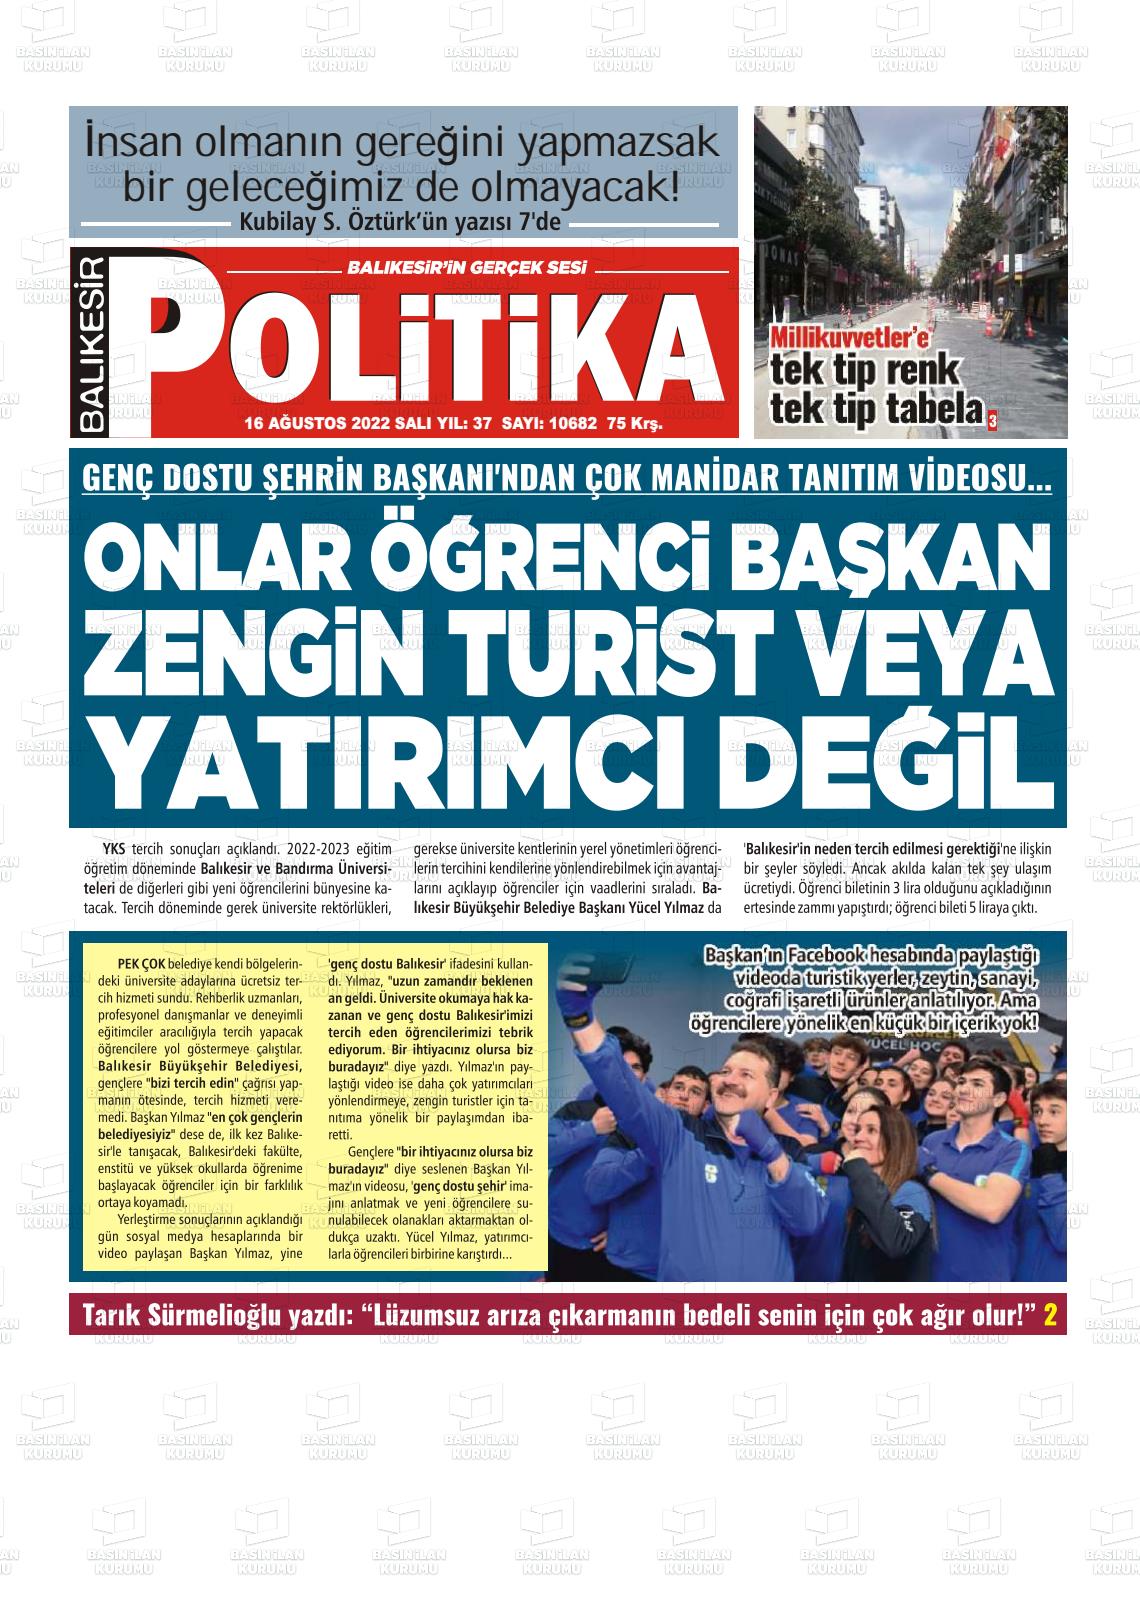 16 Ağustos 2022 Balıkesir Politika Gazete Manşeti